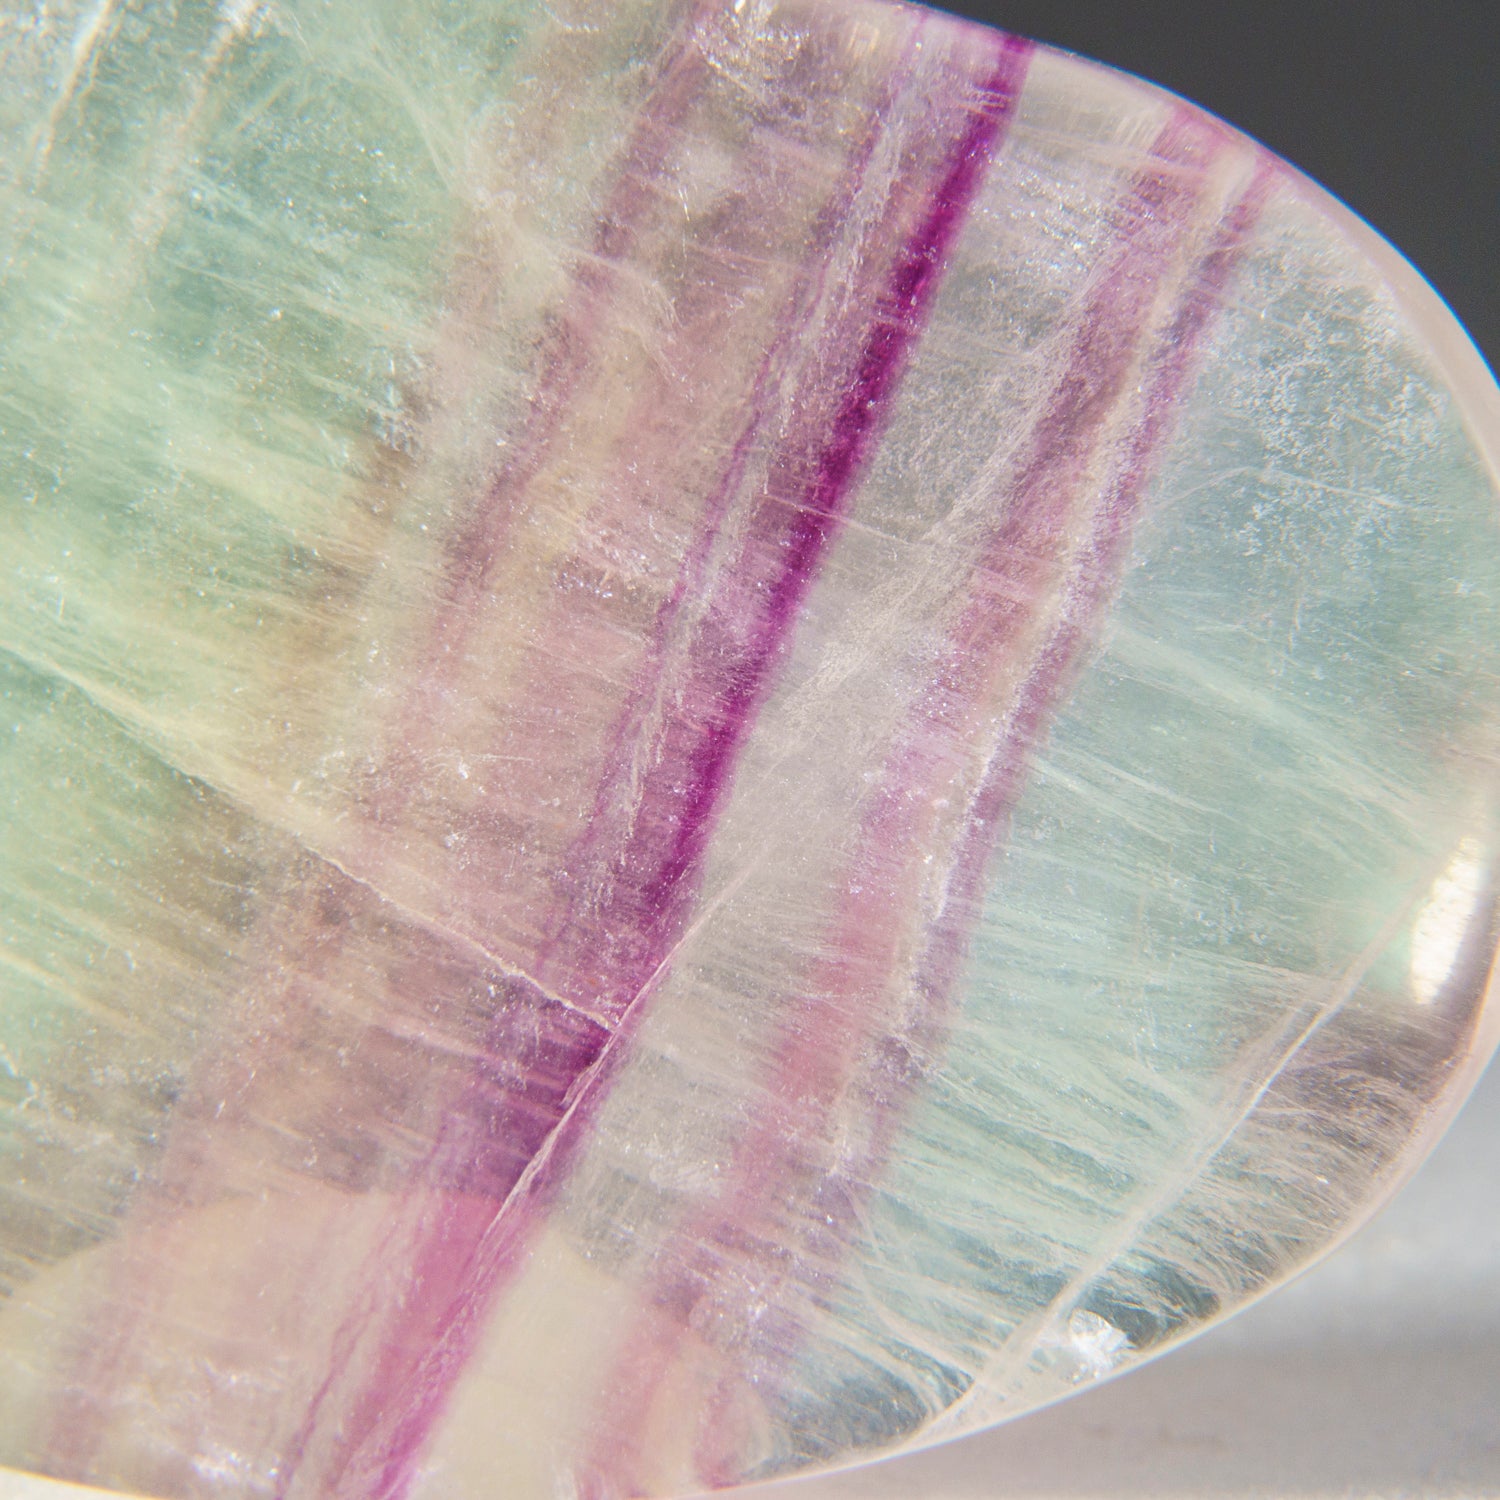 Genuine Polished Banded Rainbow Fluorite Palm Crystal